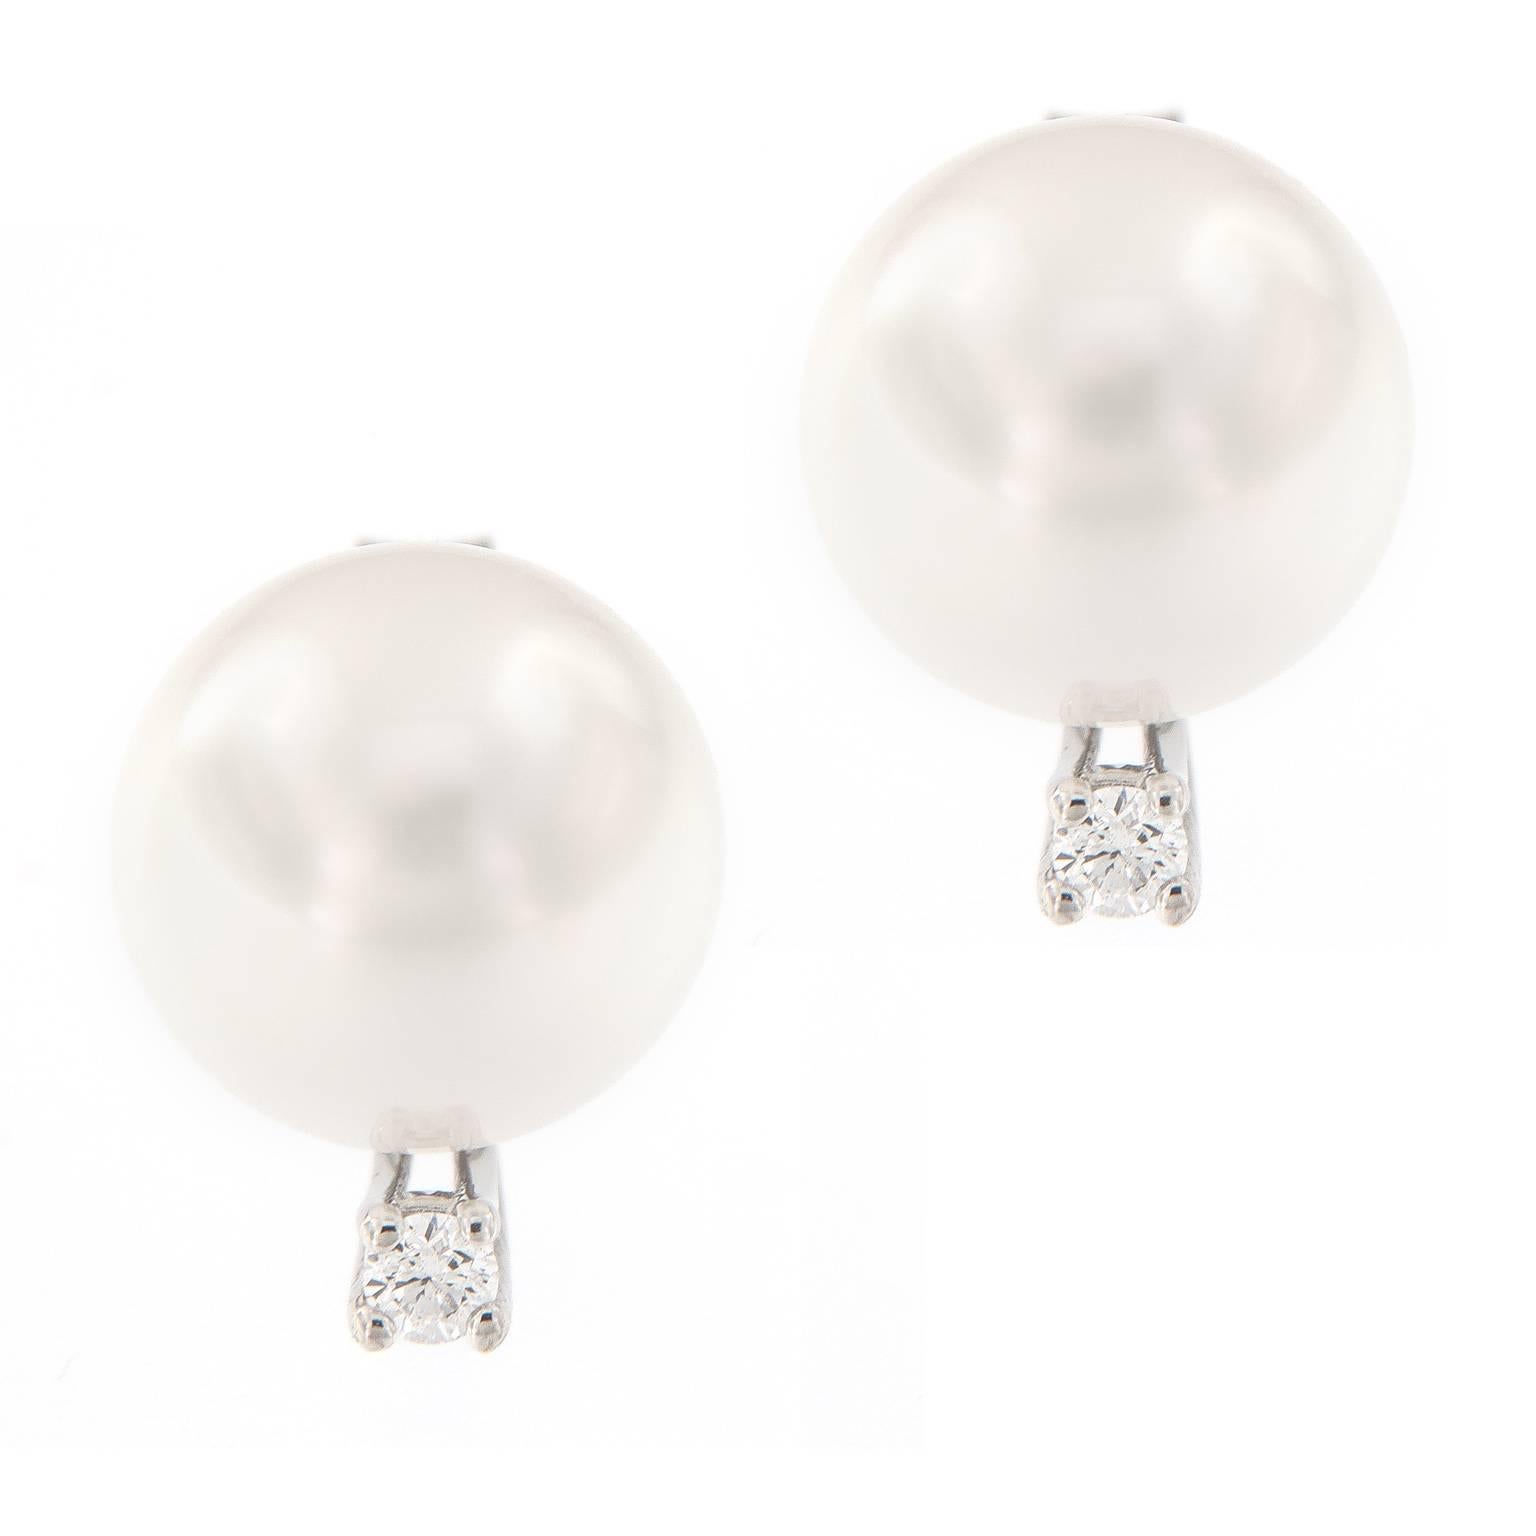 South Sea Pearl and Diamond Gold Stud Earrings